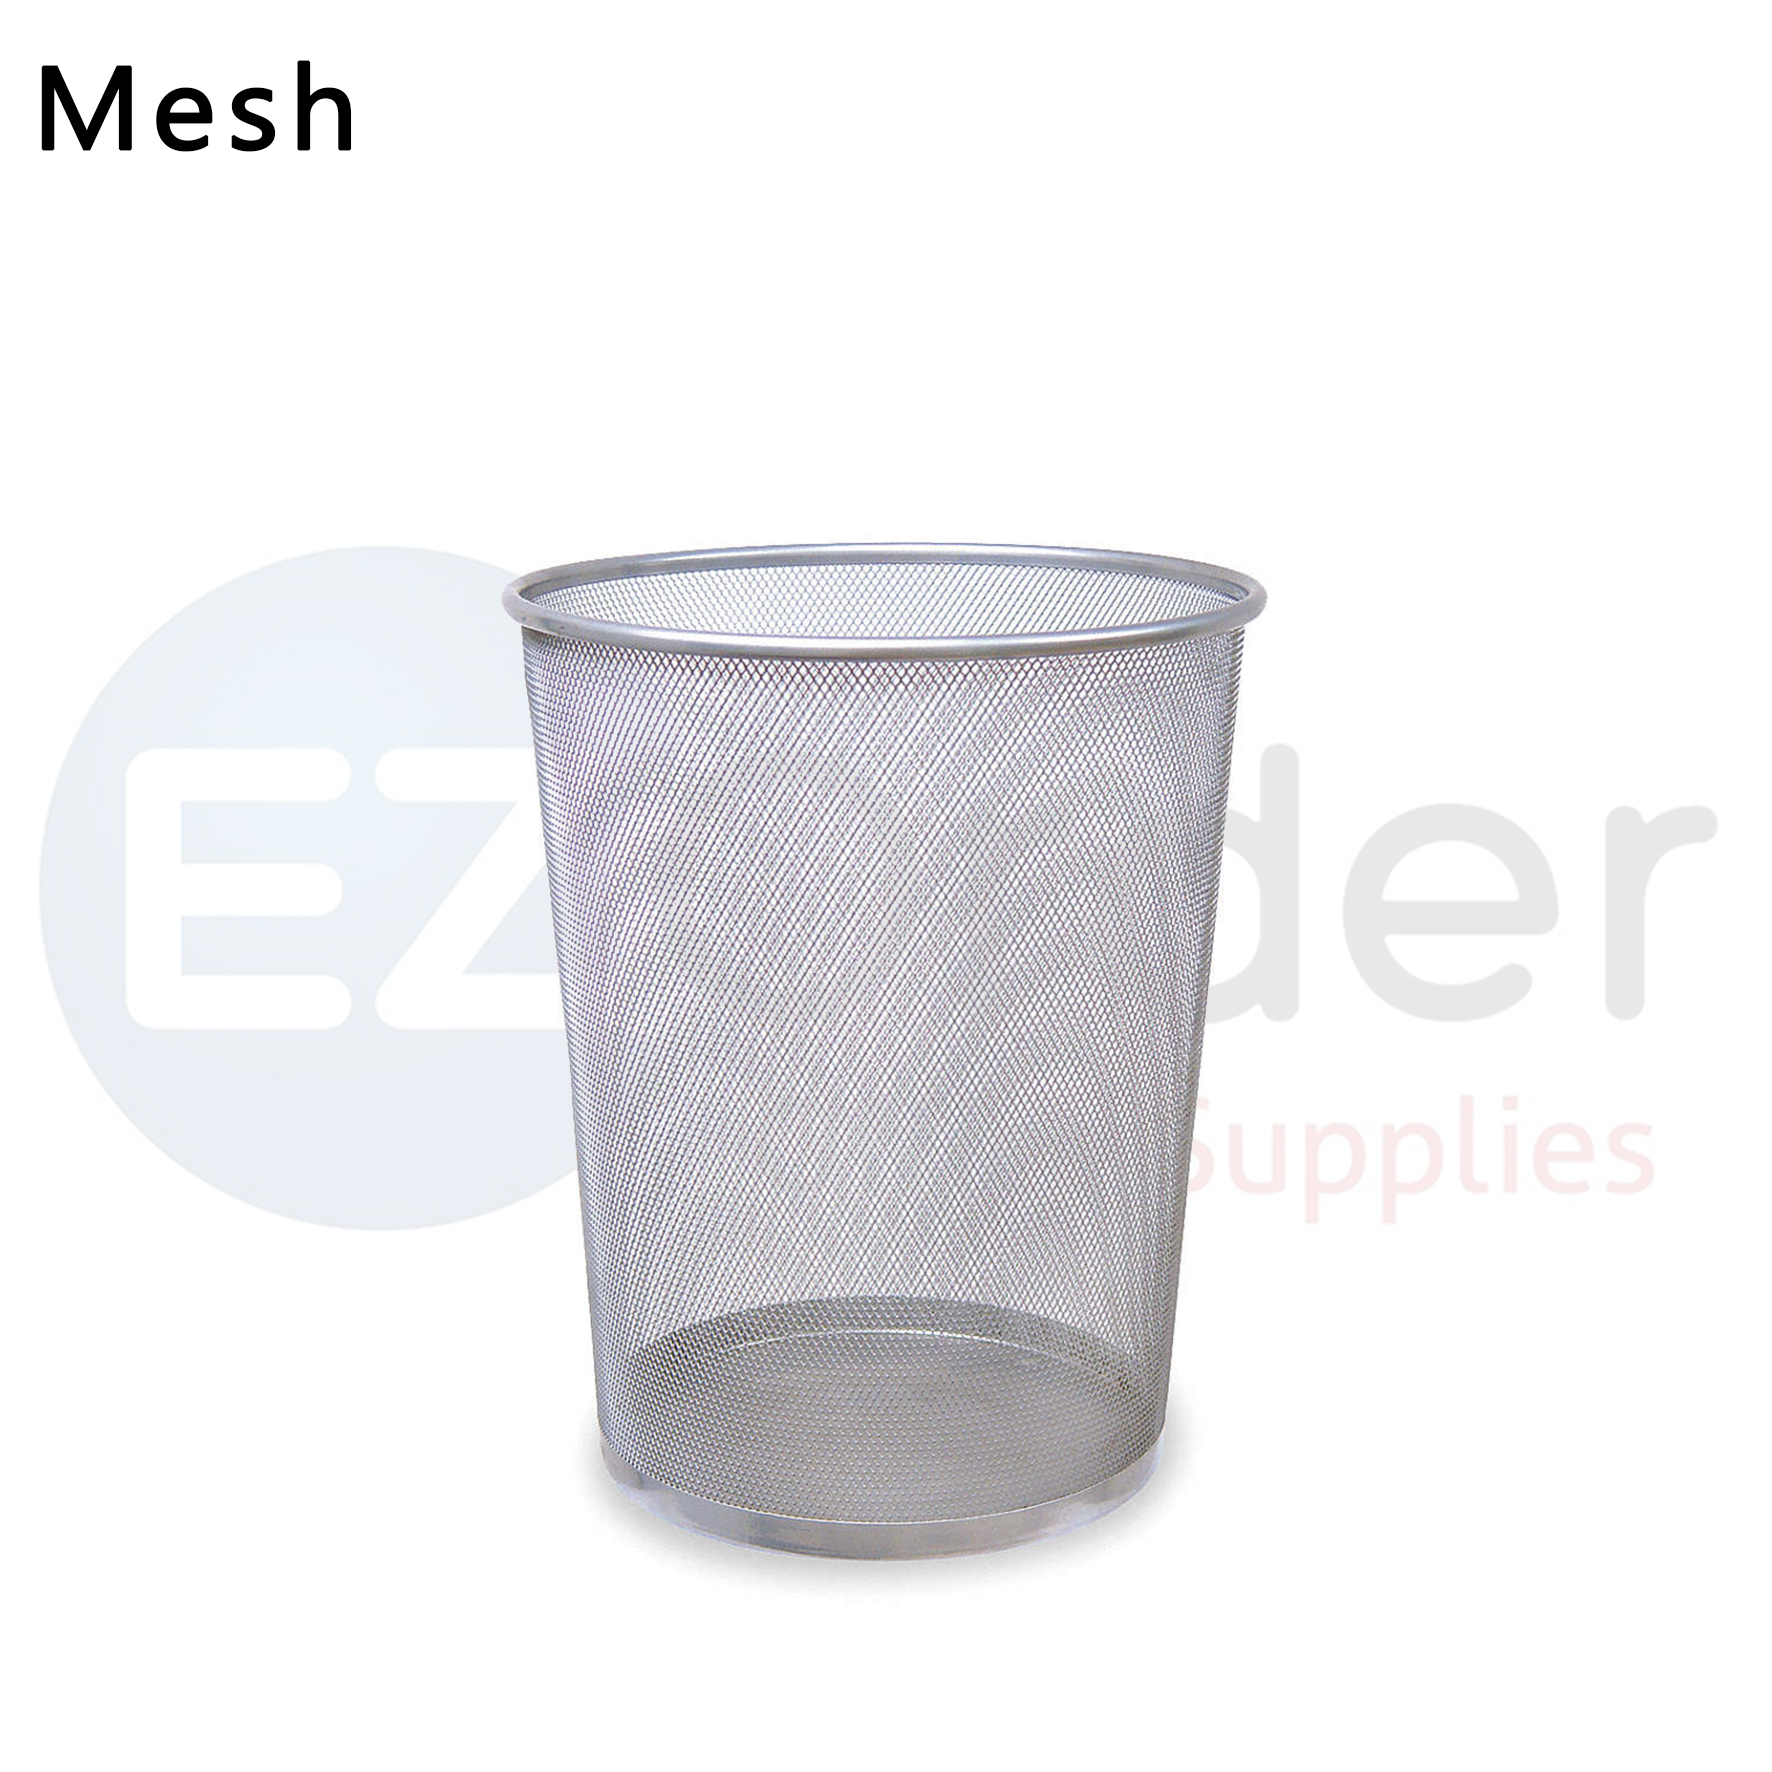 Mesh Waste basket round shape Dia:265mm H:285mm